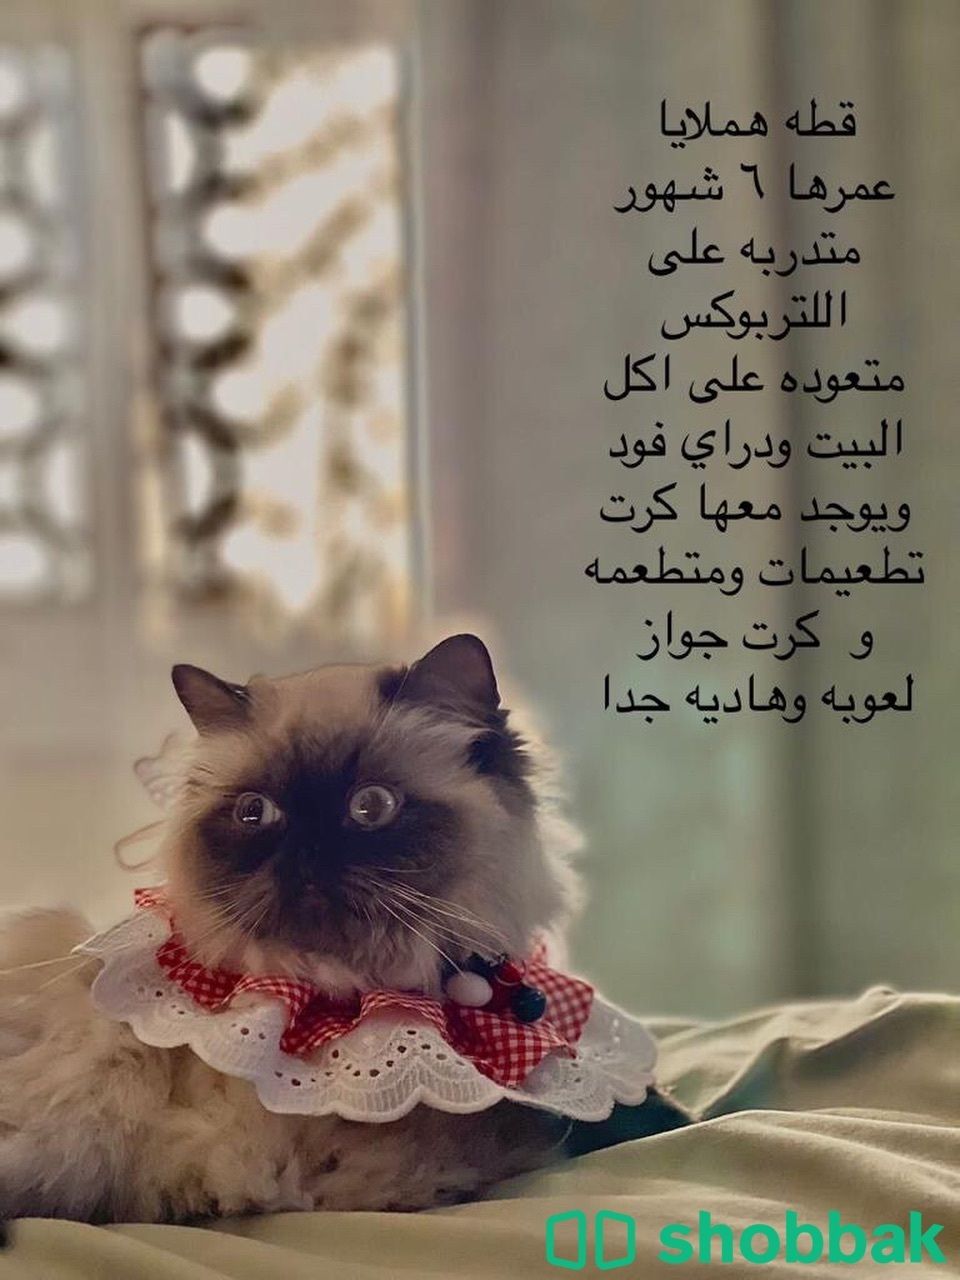 بيع قطة هملايا  مع اغراضها Shobbak Saudi Arabia